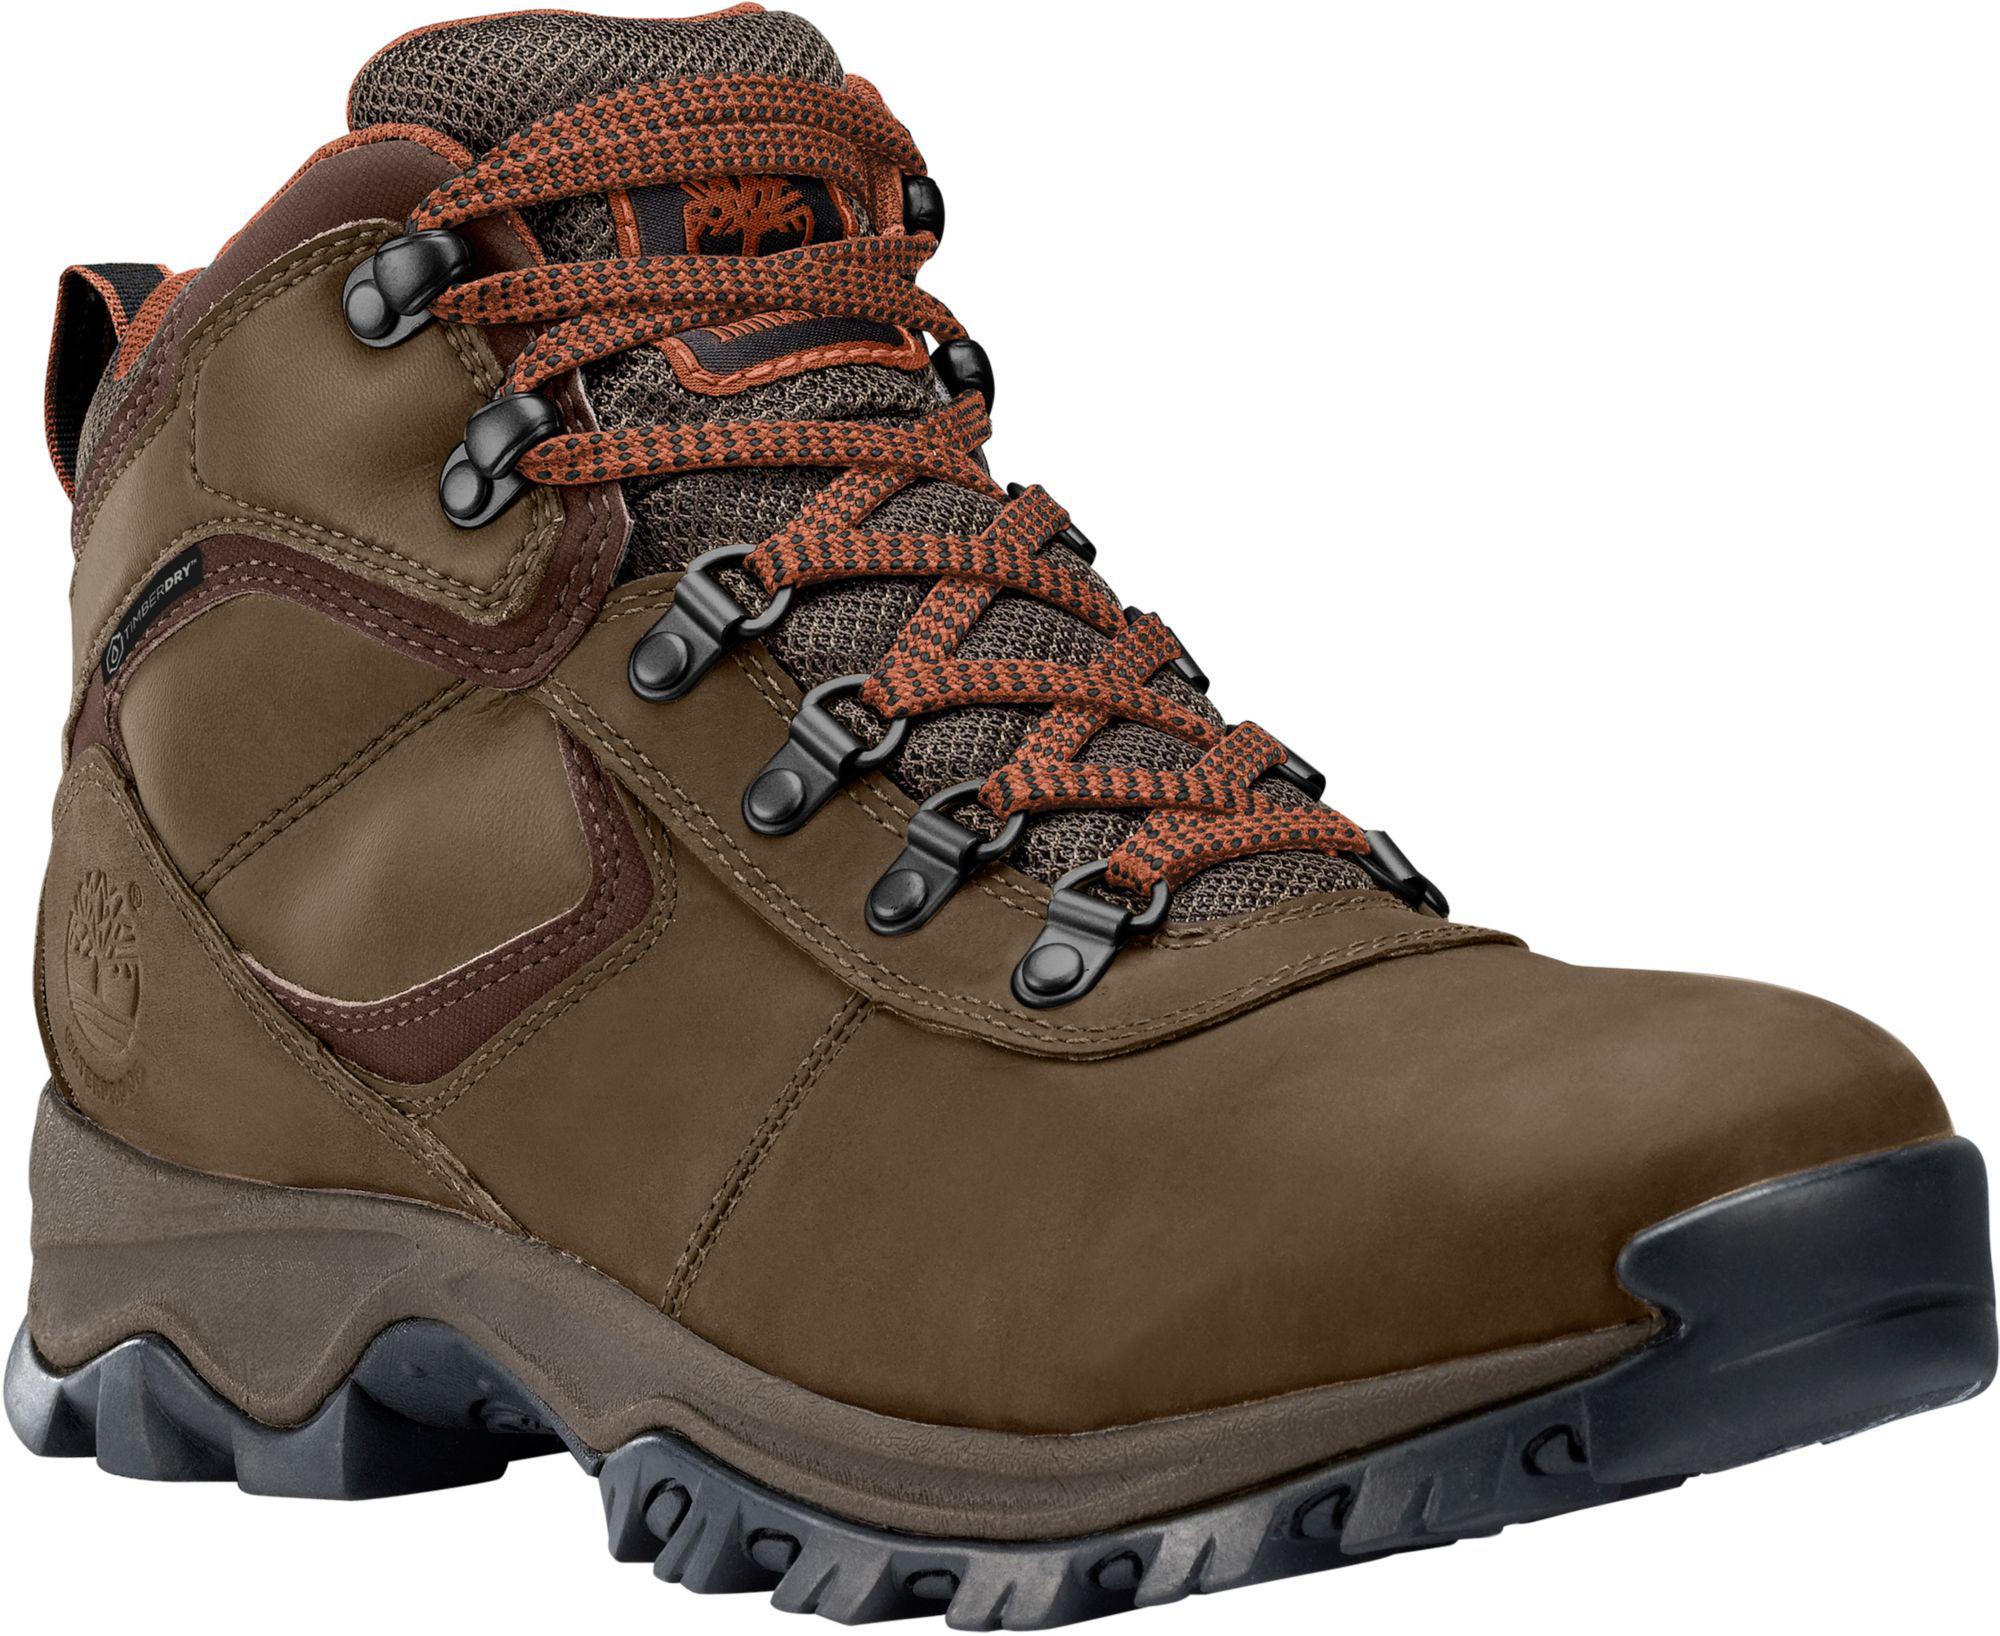 Dicks sporting goods hiking boots for men